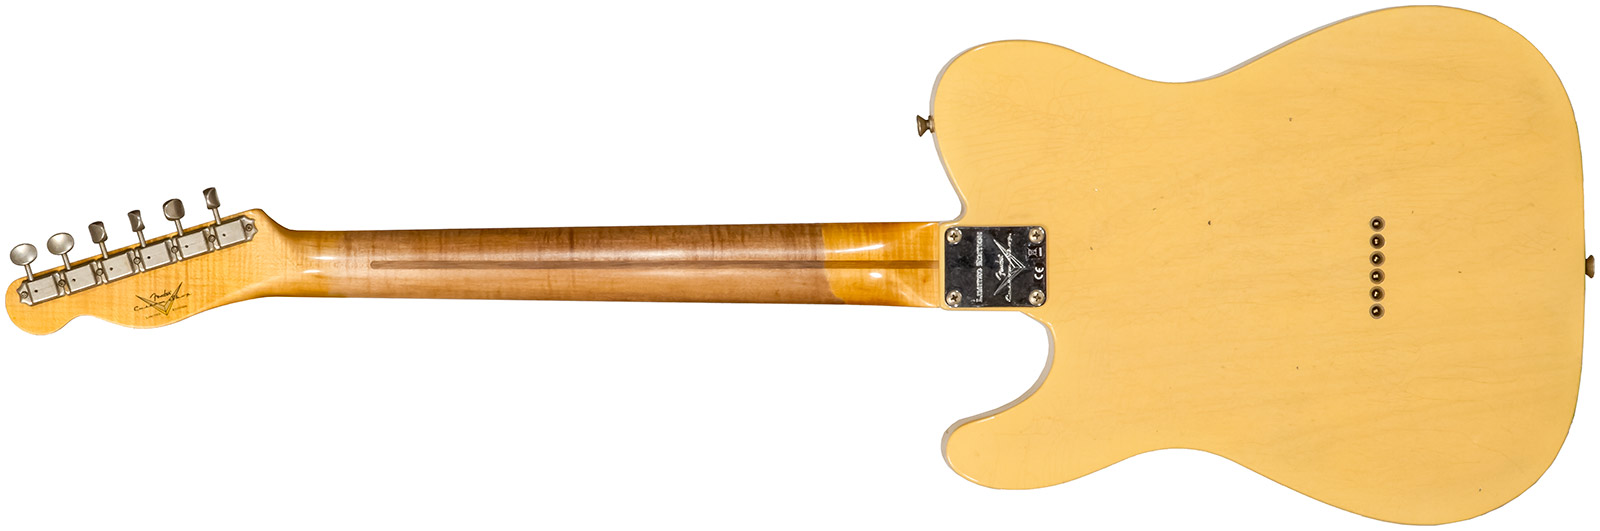 Fender Custom Shop Tele 1953 2s Ht Mn #r126793 - Journeyman Relic Aged Nocaster Blonde - Tel shape electric guitar - Variation 1